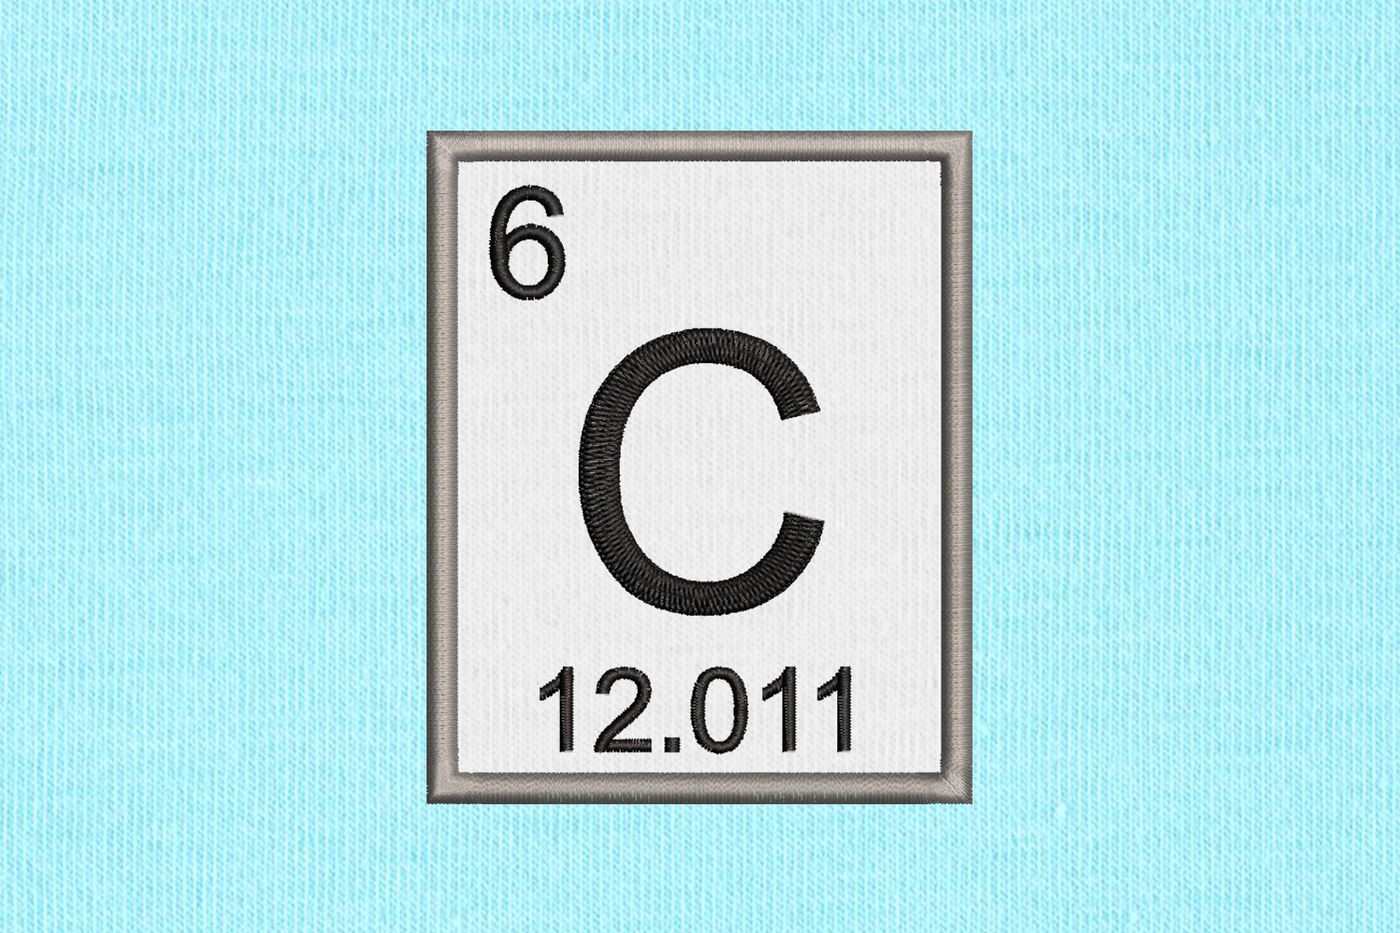 Applique design for the chemical element information for carbon.